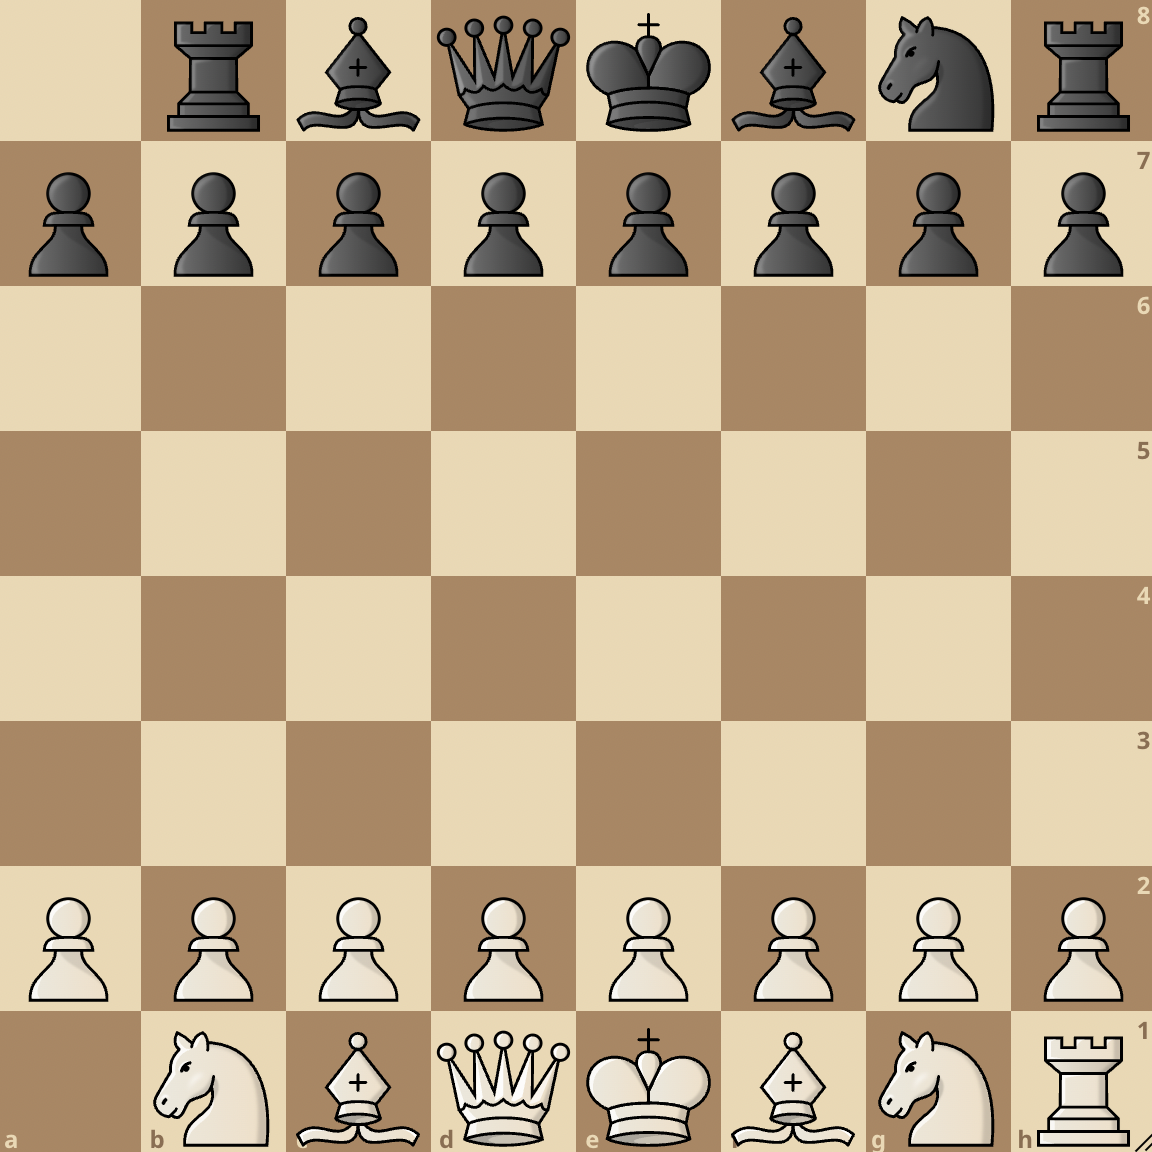 Handicap chess